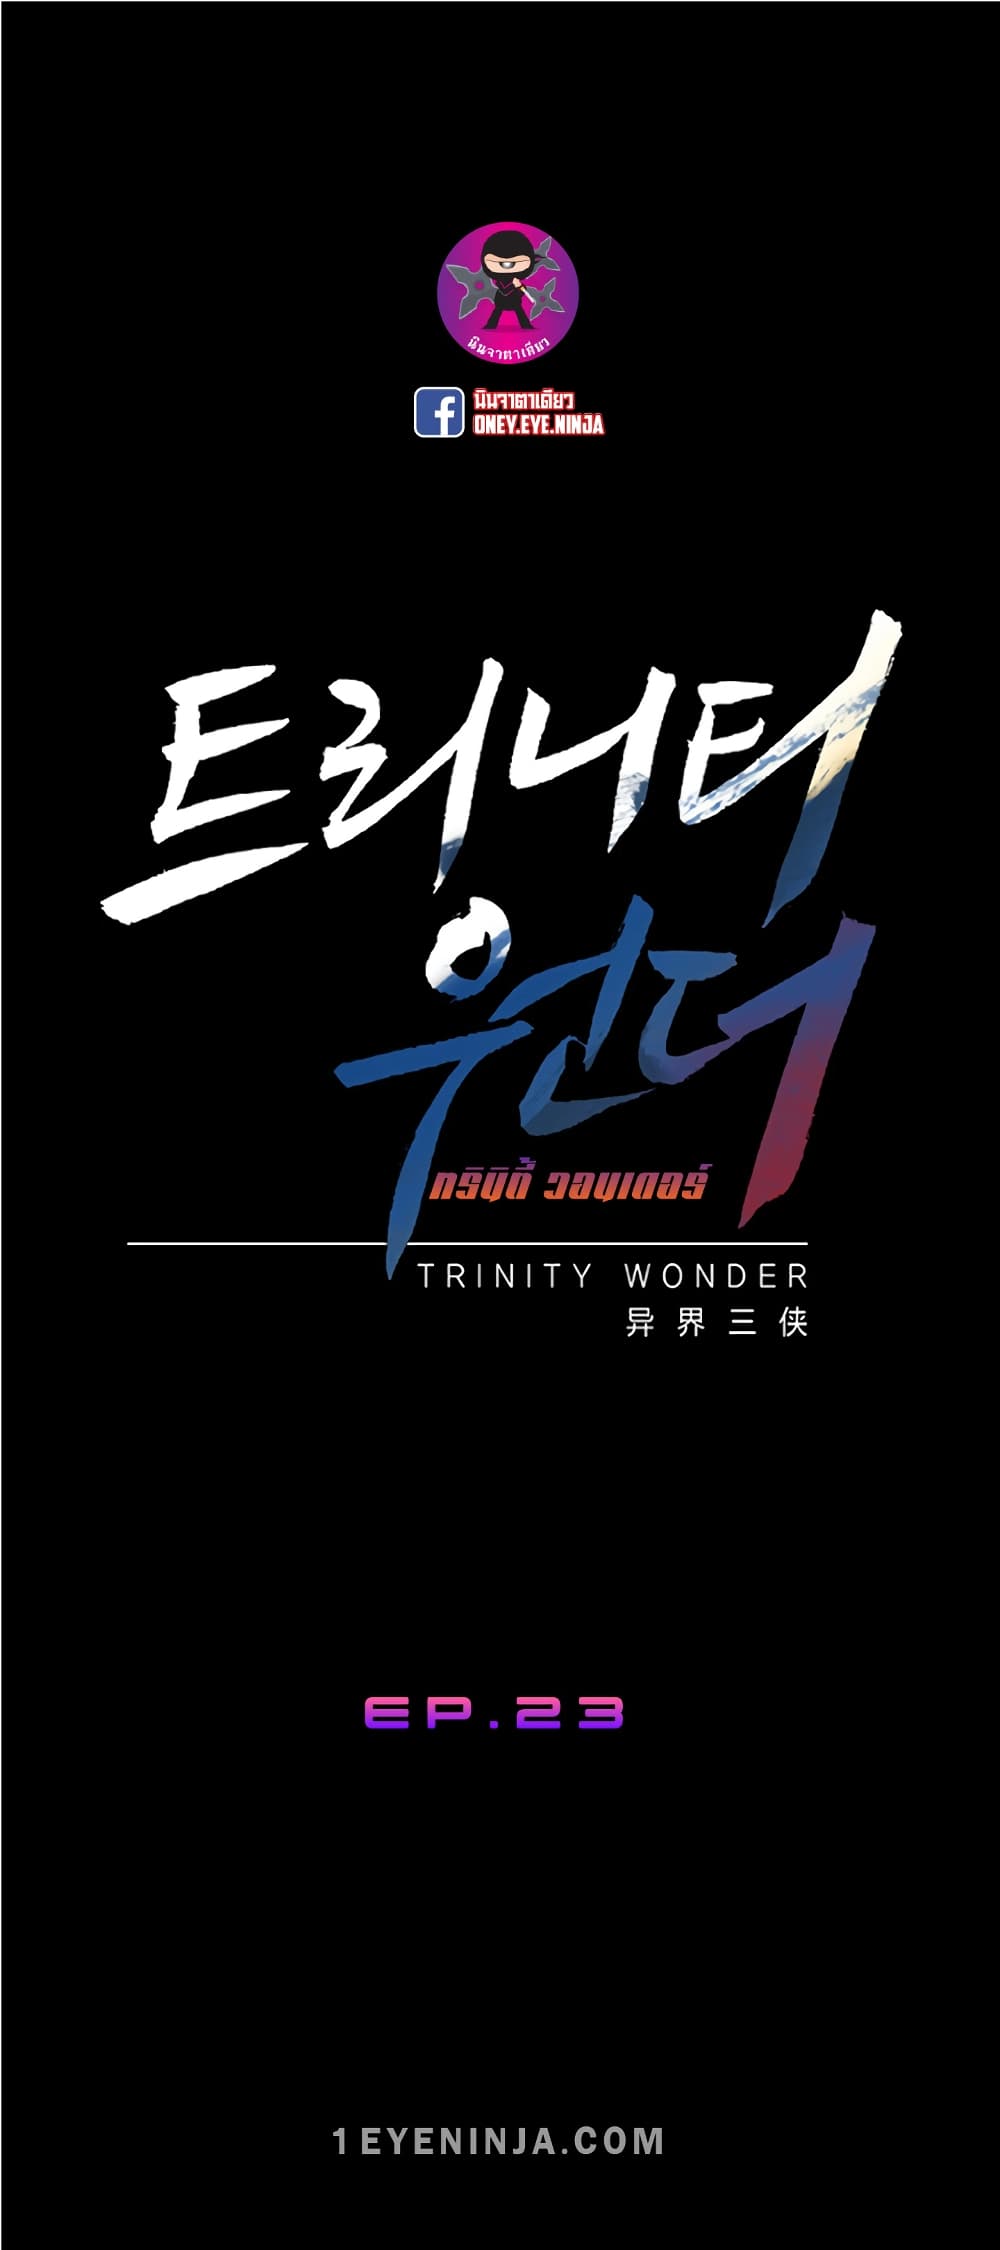 Trinity Wonder 23-23